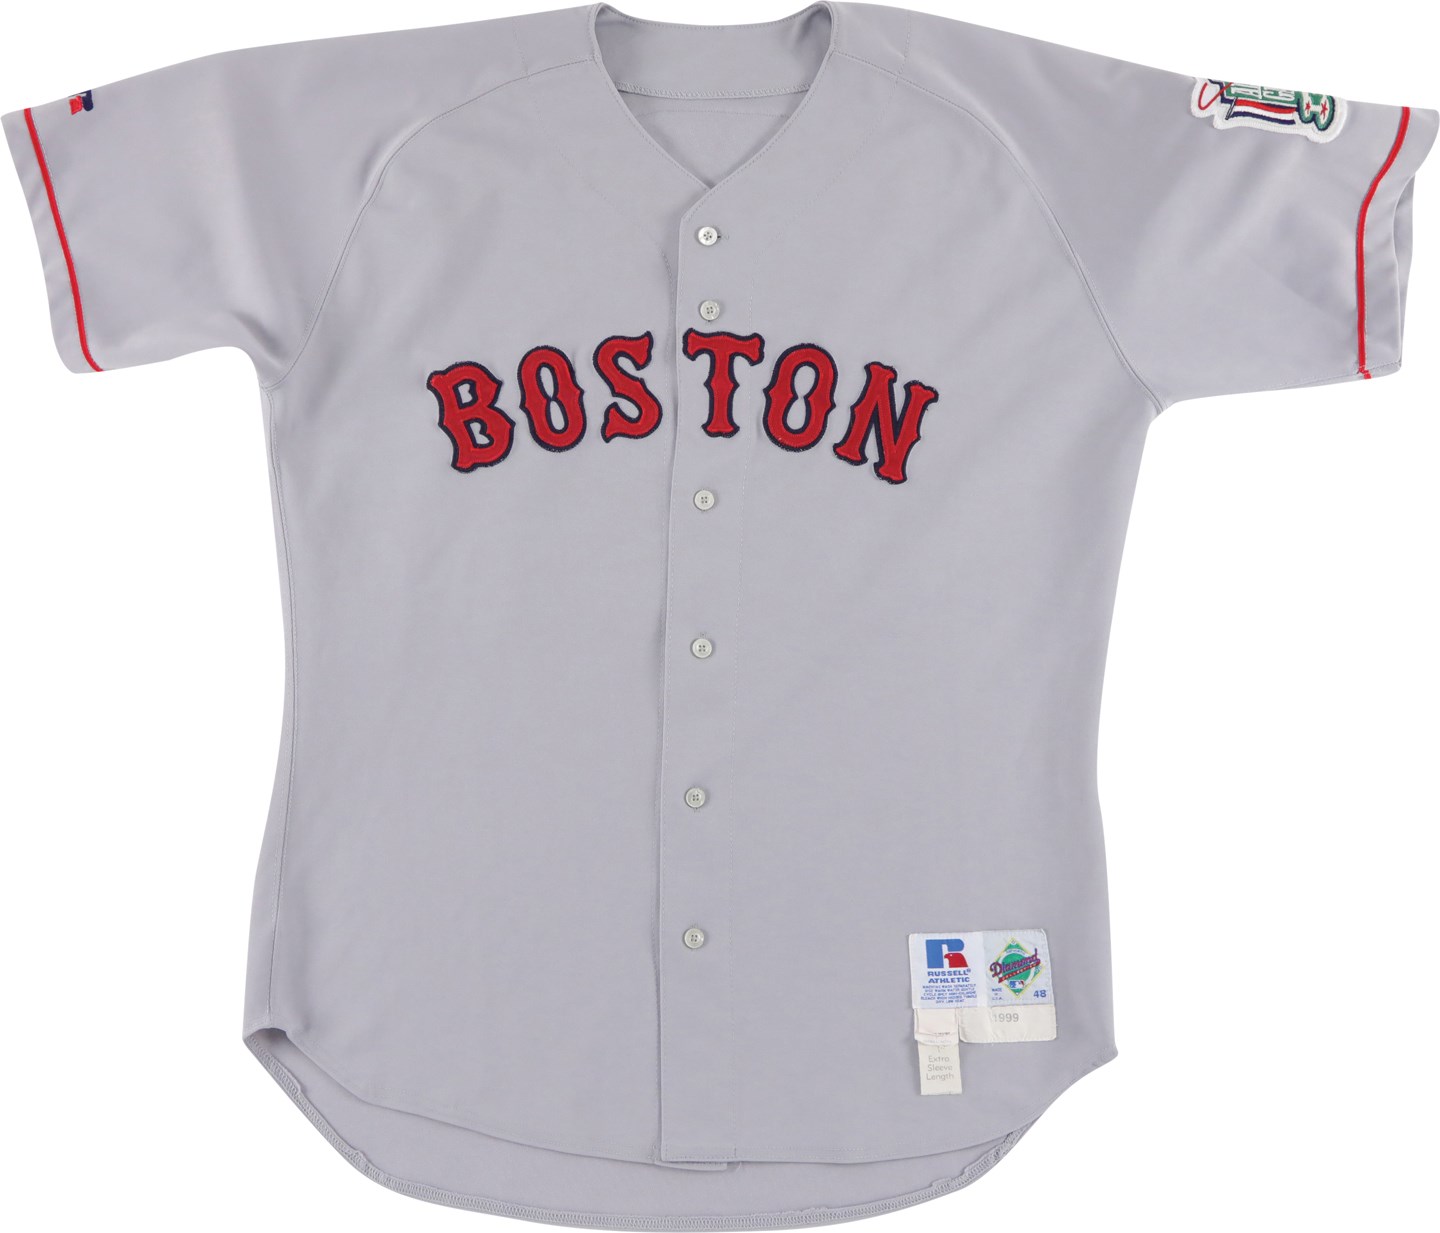 Baseball Equipment - 1999 Derek Lowe Boston Red Sox Game Worn Jersey